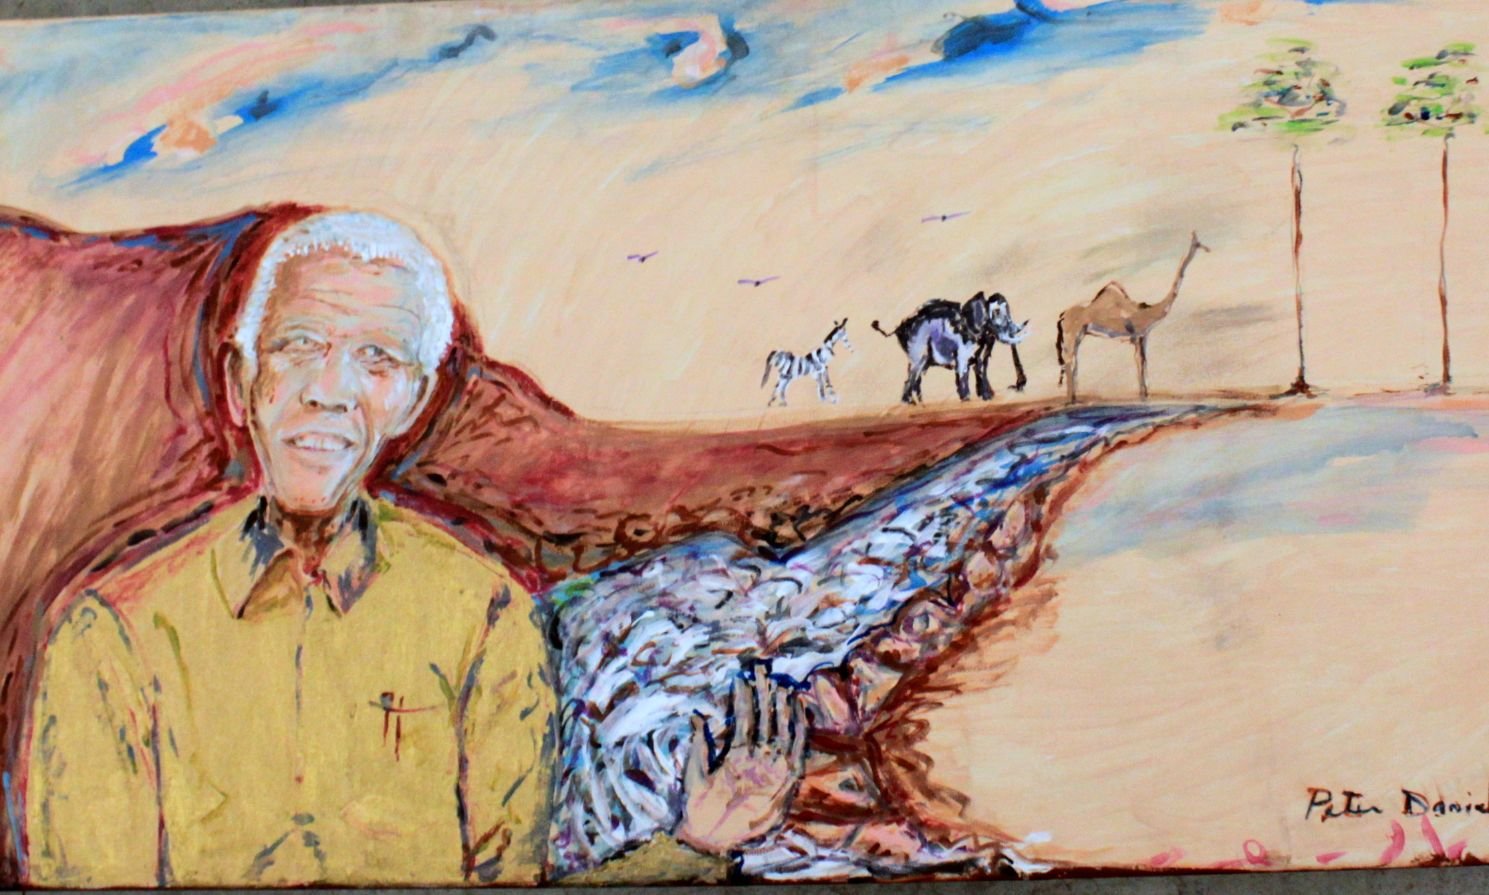 Nelson Mandela Acrylic on Canvas 24x36 $2895